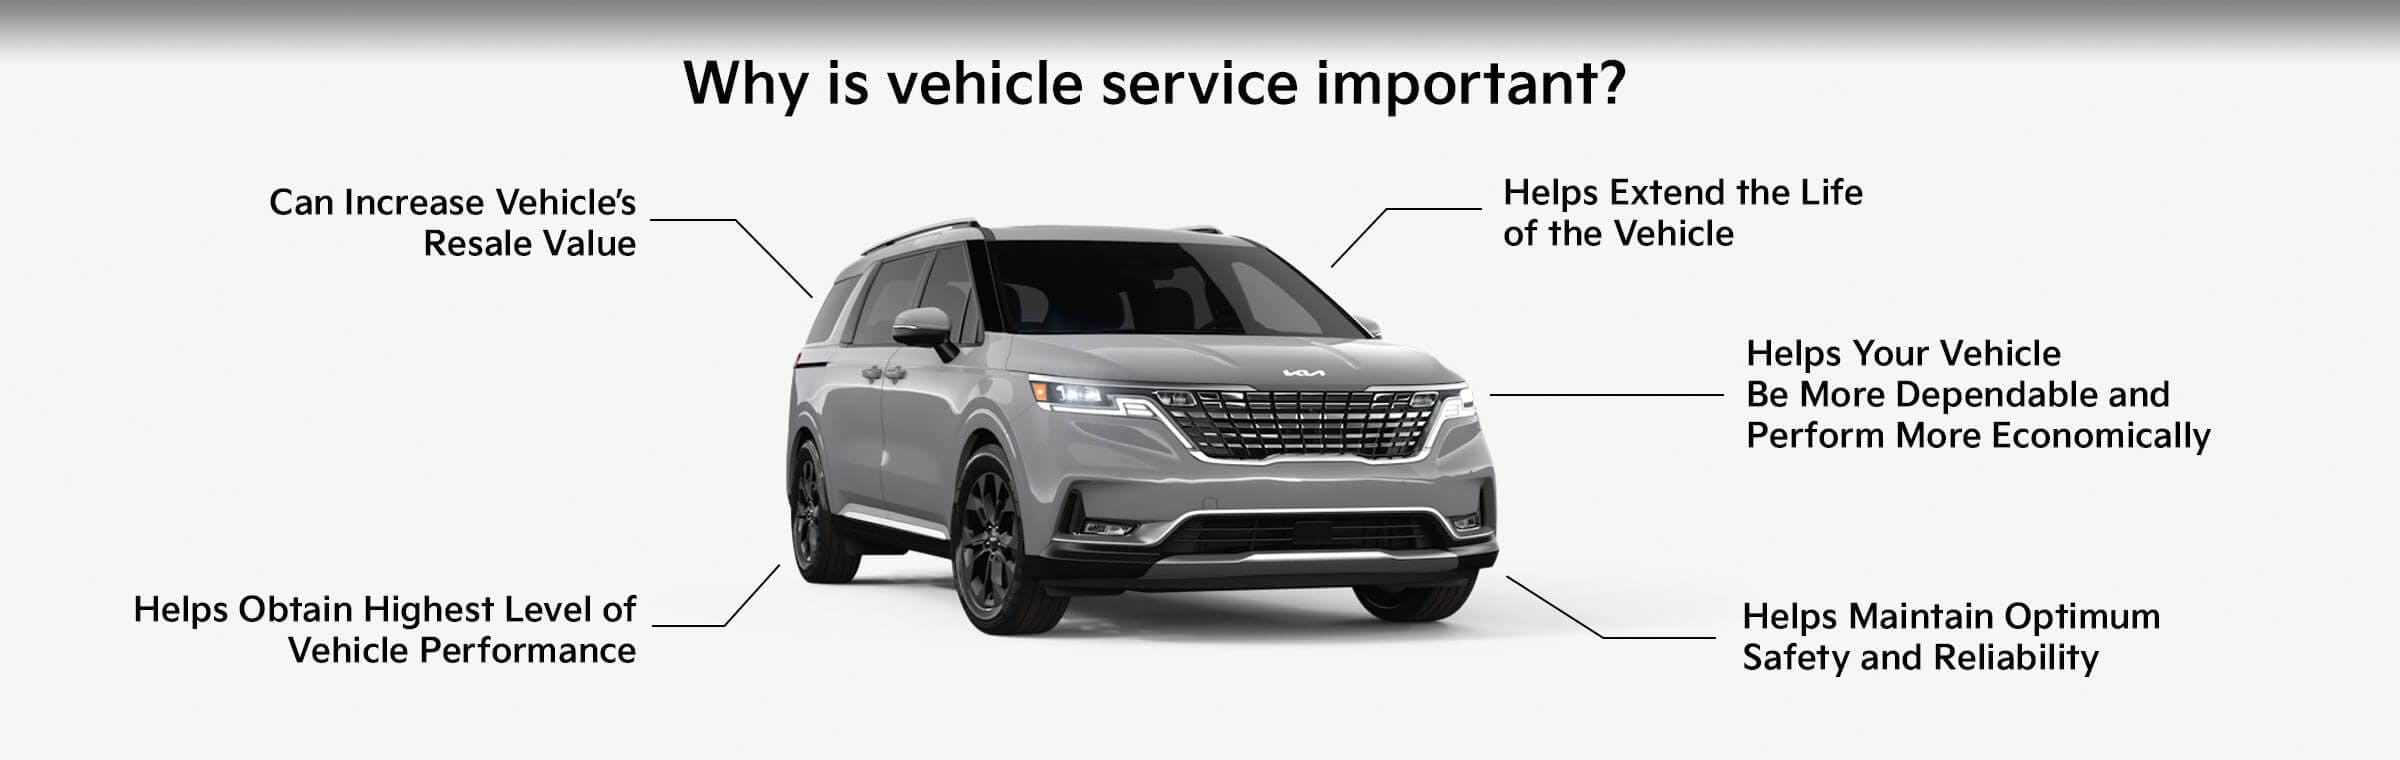 vehicle service illustration